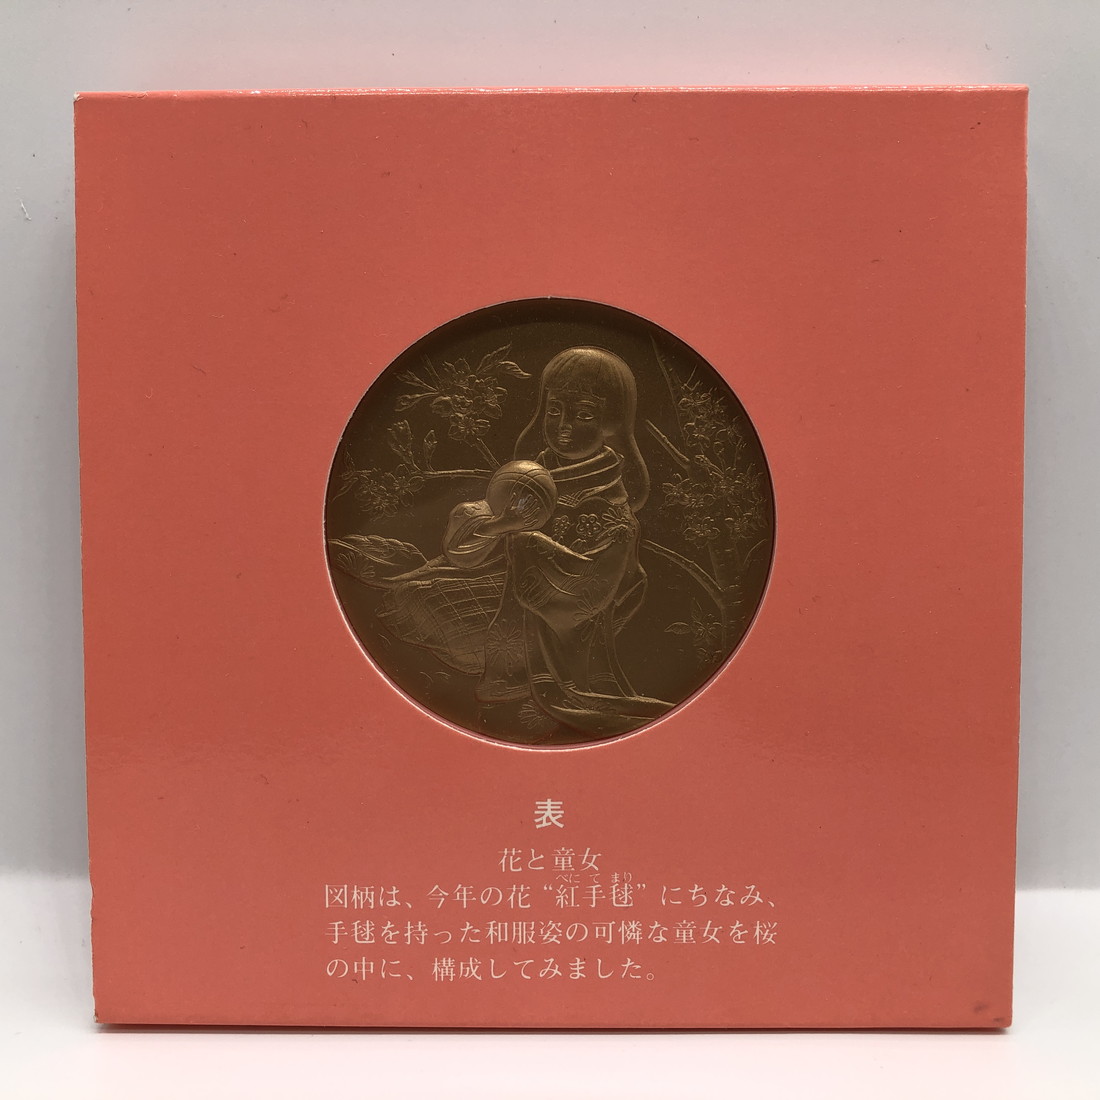 楽天市場 記念メダル造幣局製 : 記念コインの七福本舗 楽天市場店